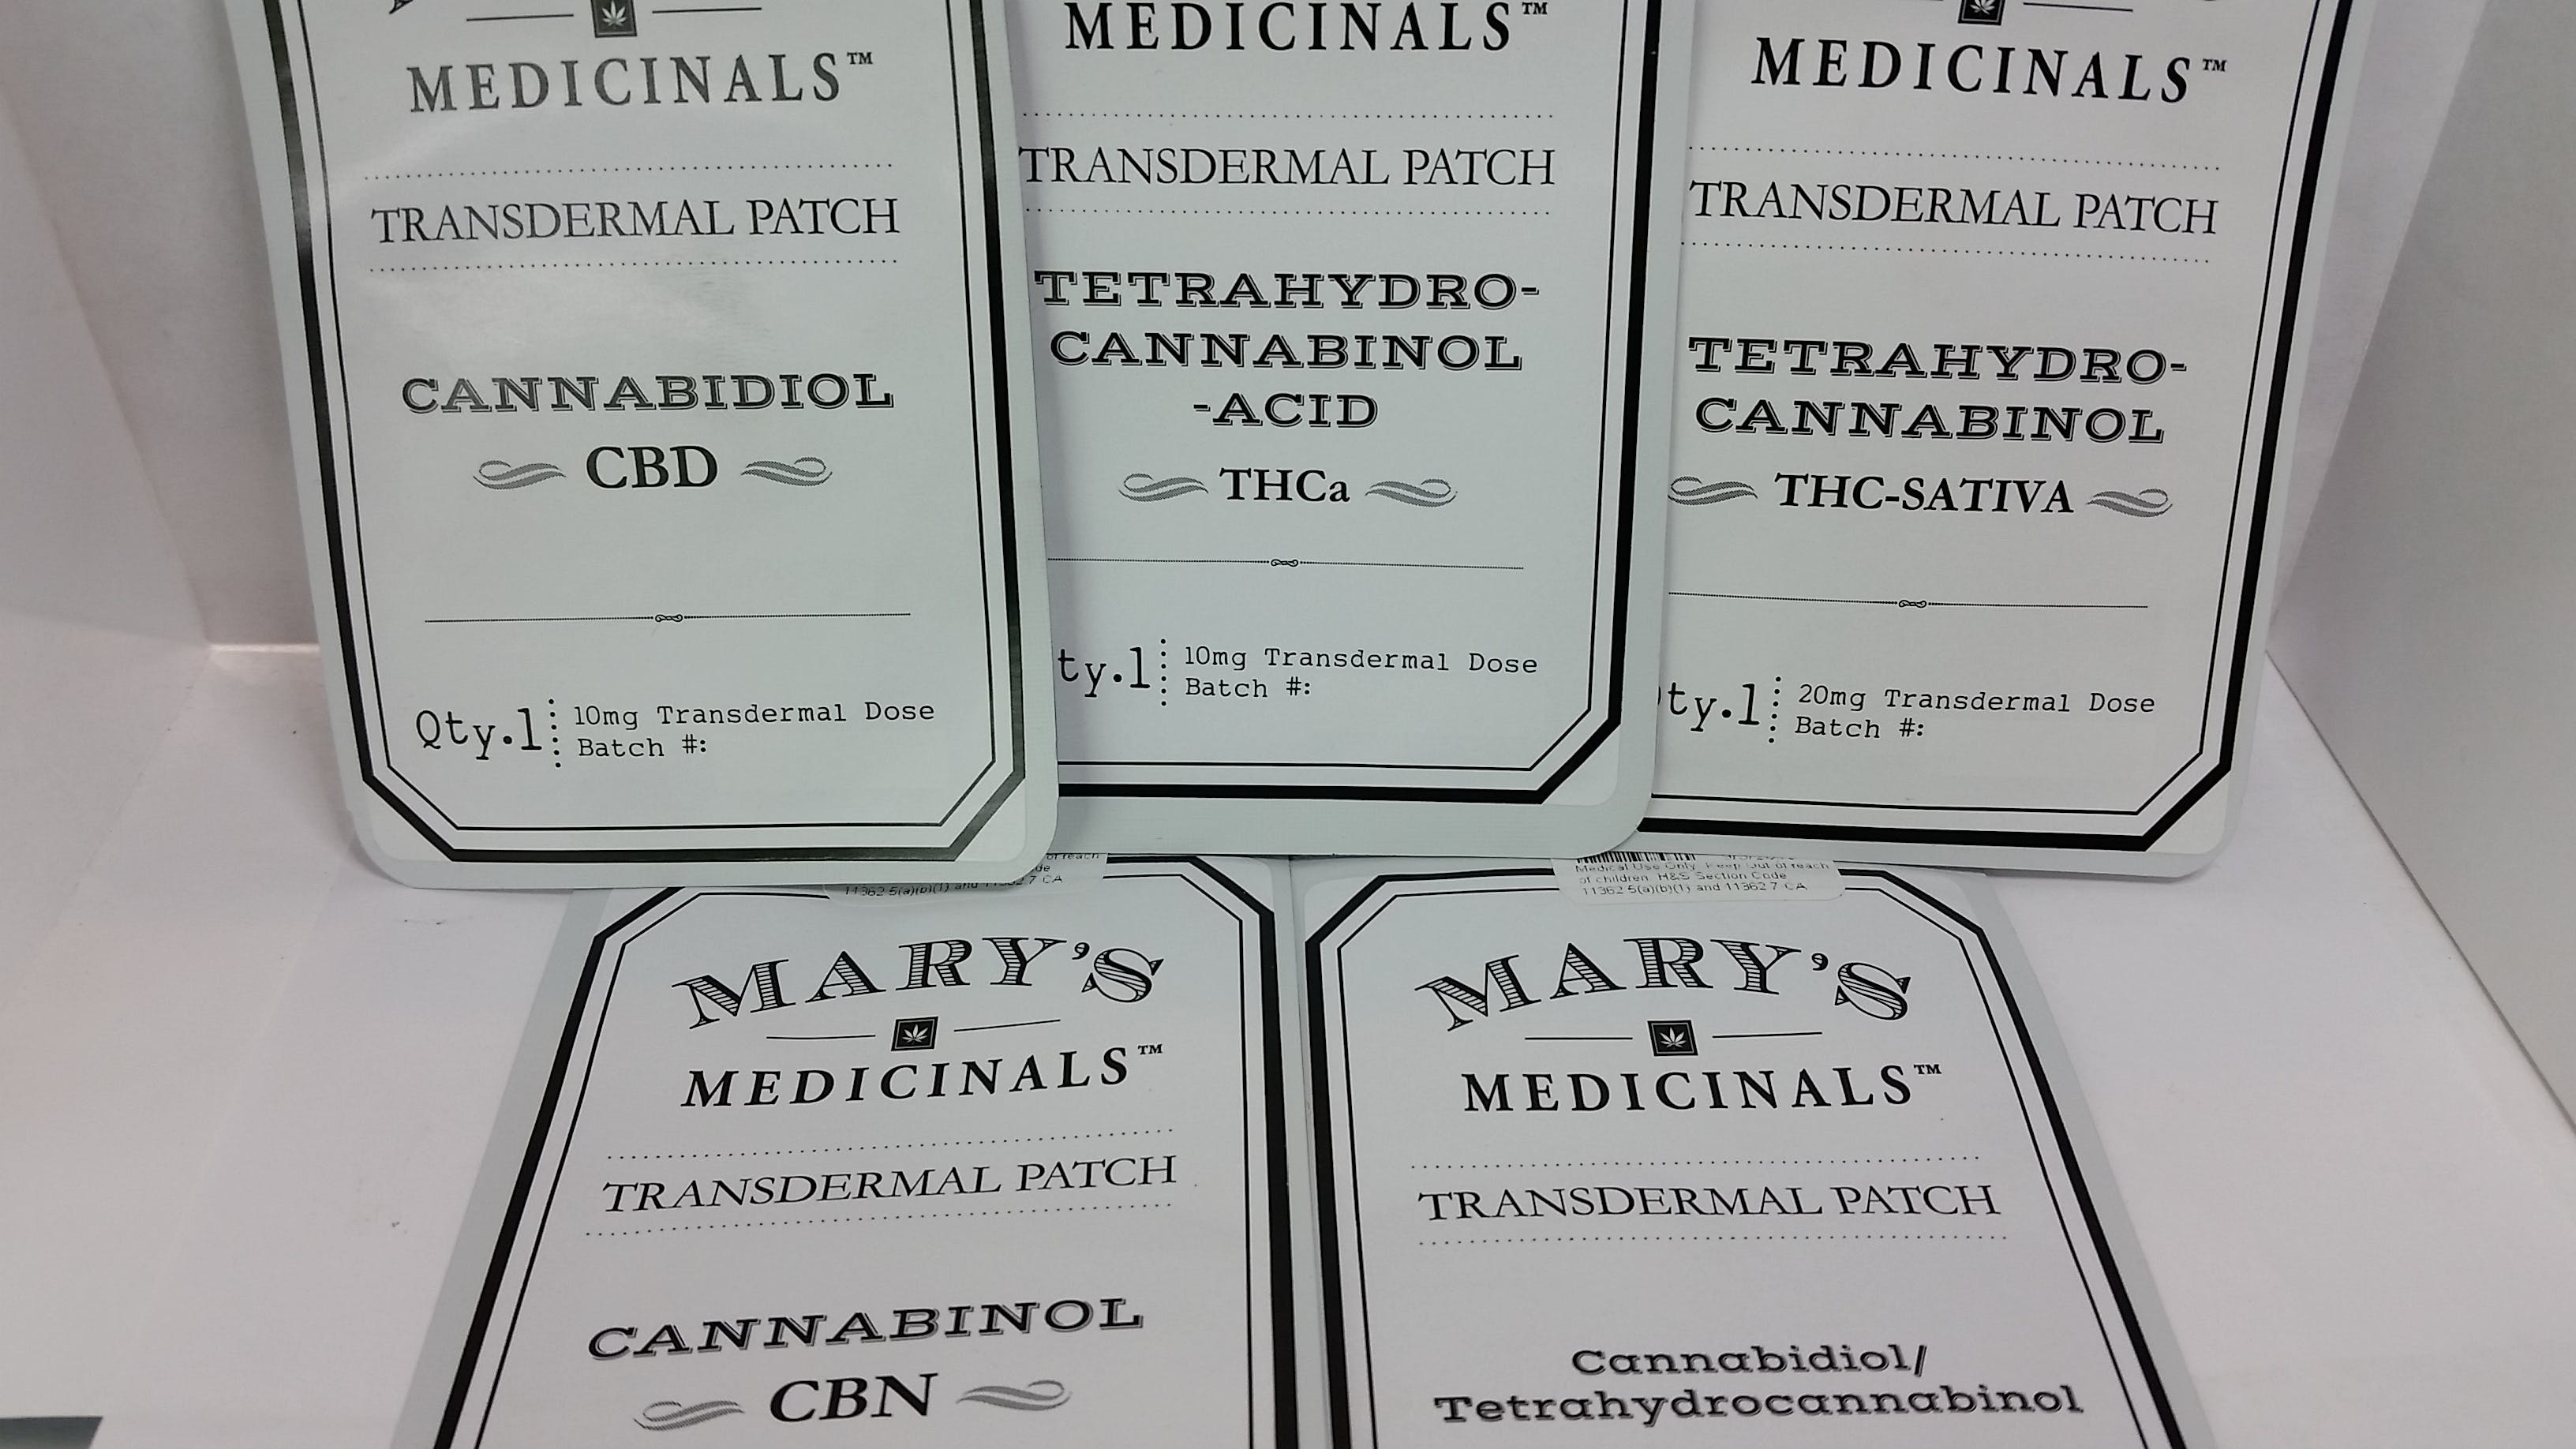 Mary's Medicinals Transdermal Patch